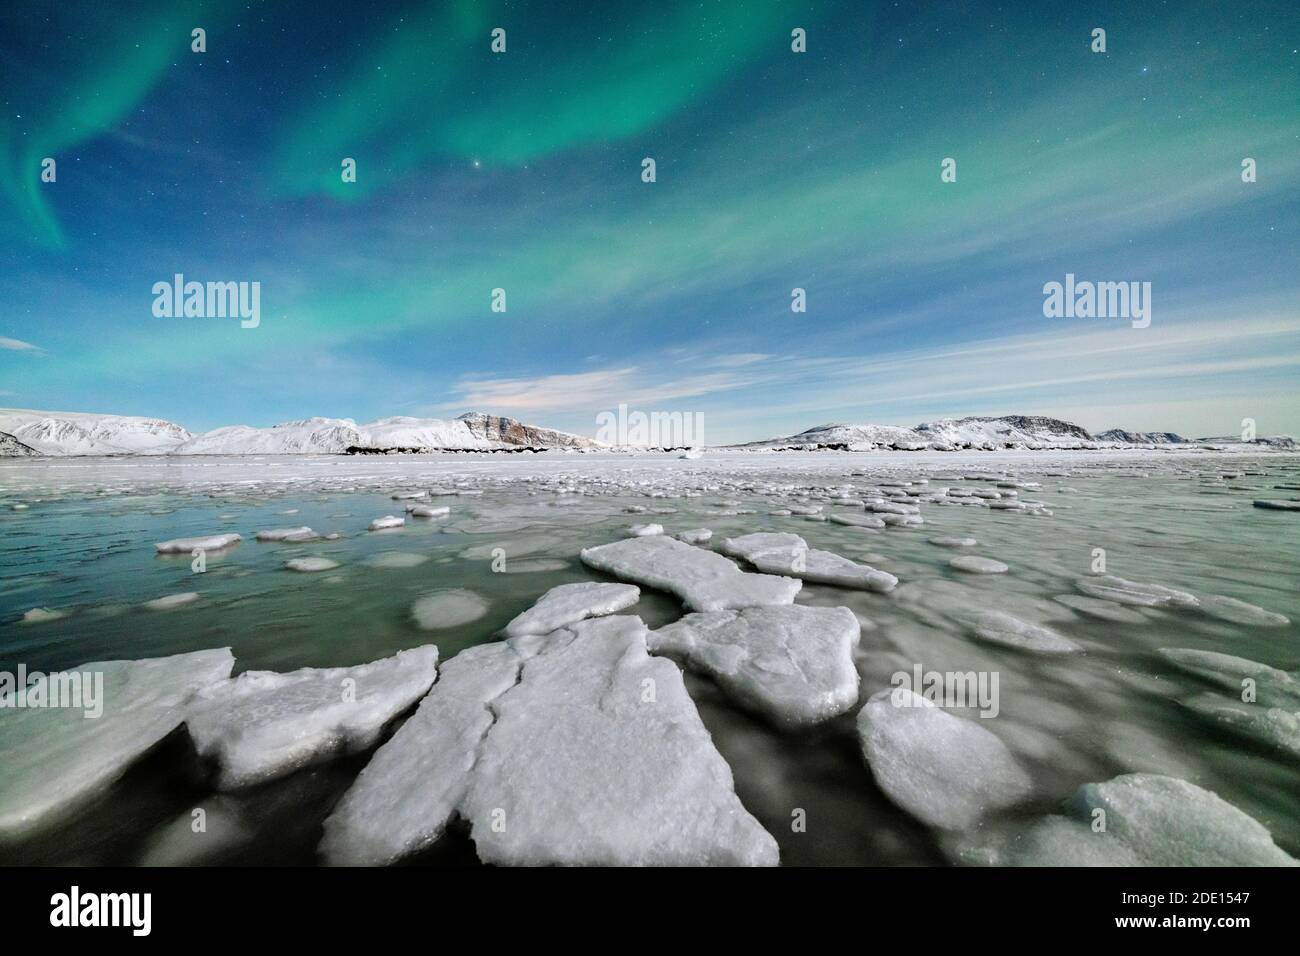 Ice blocks in the frozen Arctic sea lit by Northern Lights (Aurora Borealis), Tanamunningen Nature Reserve, Leirpollen, Troms og Finnmark, Norway Stock Photo